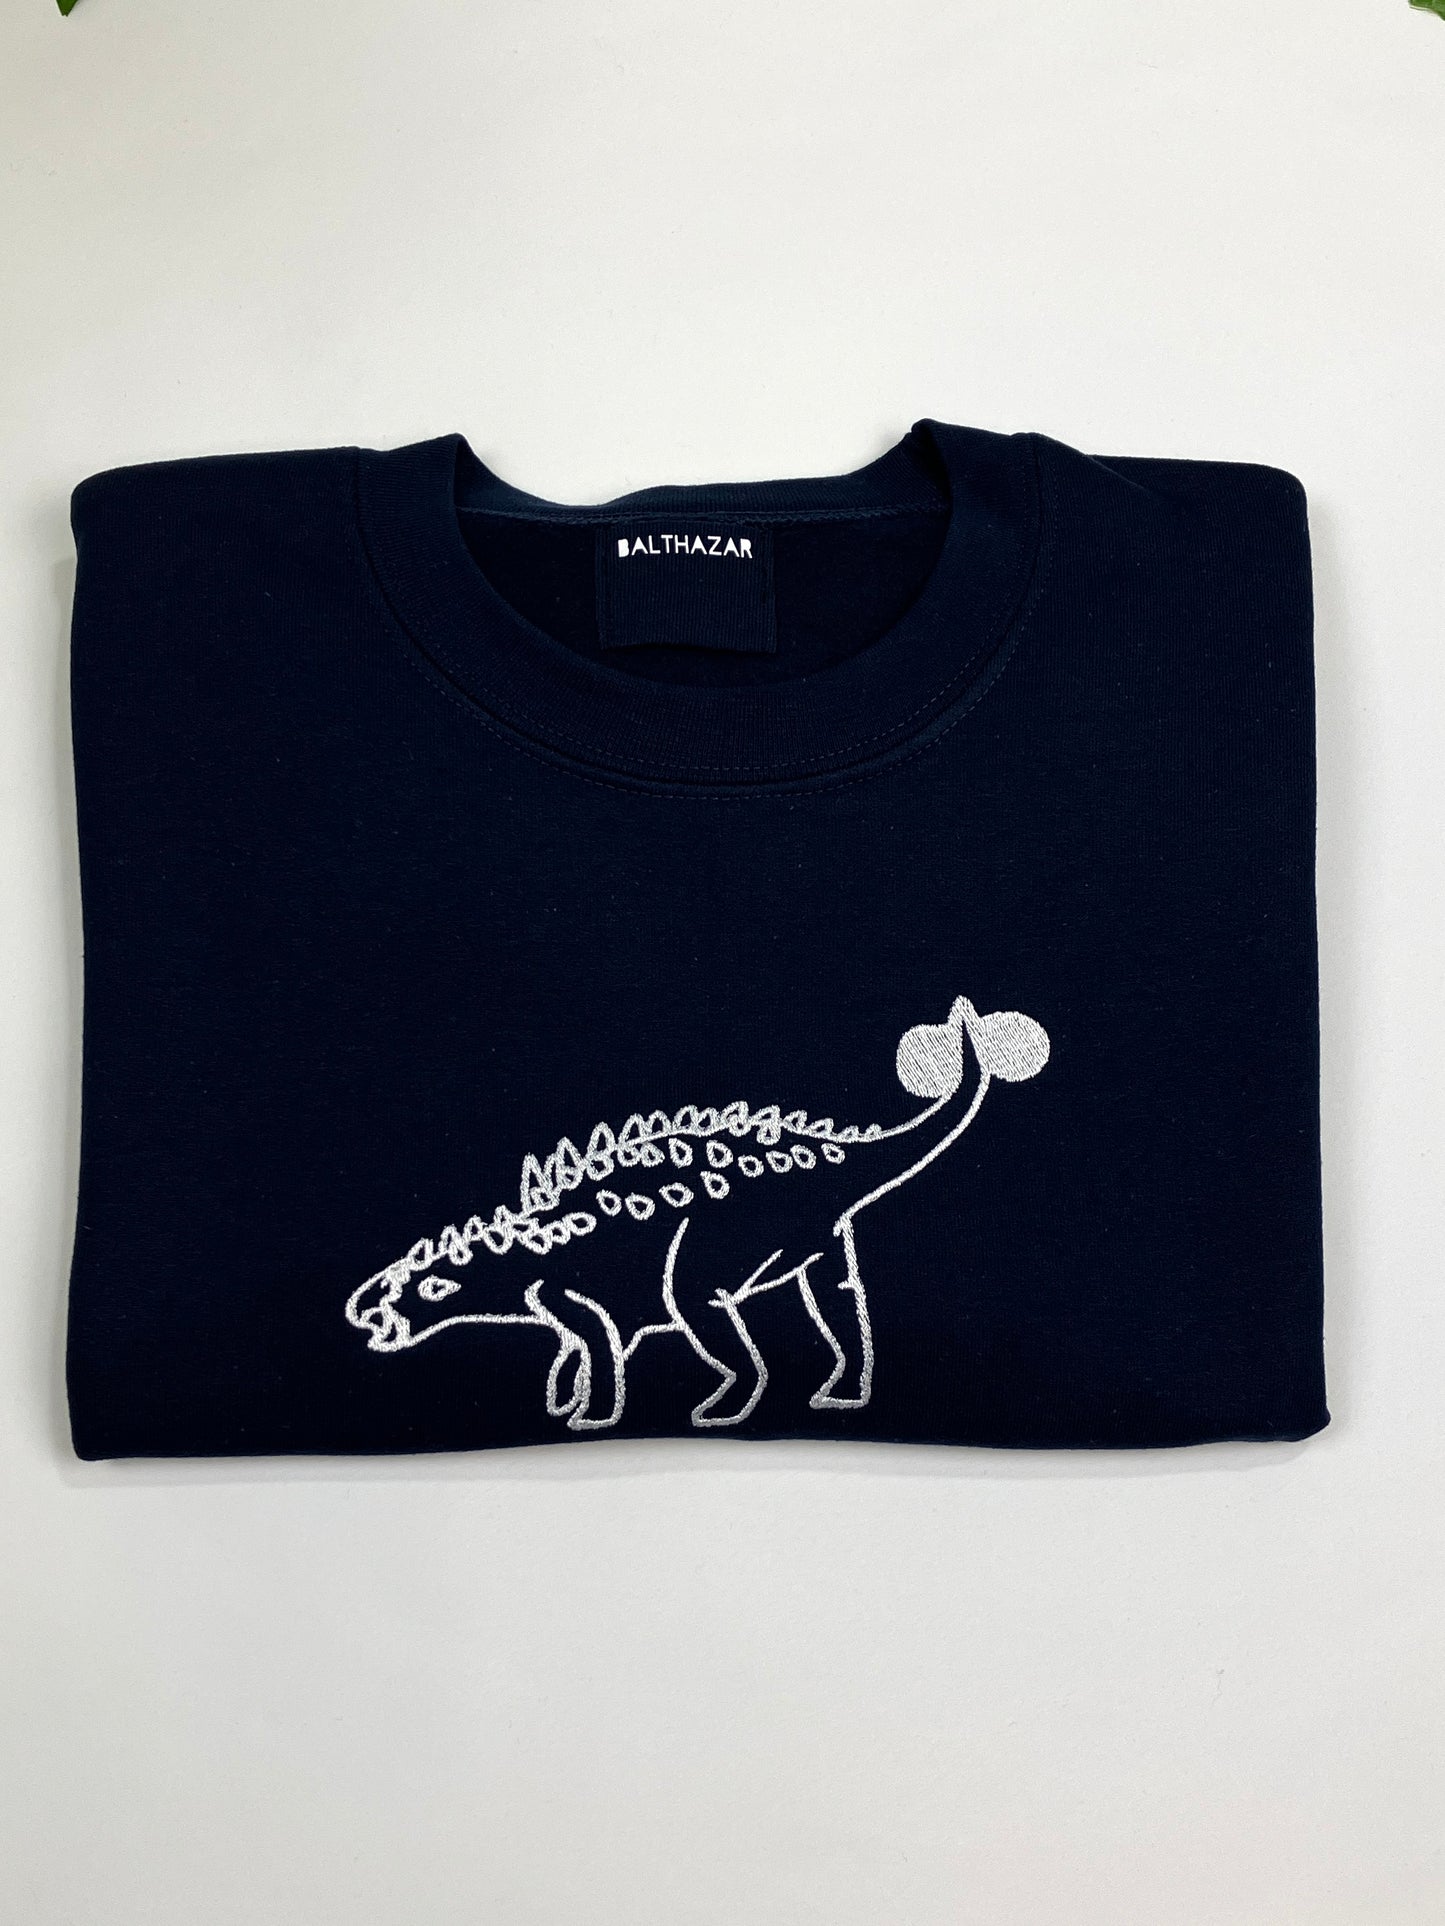 Embroidered Dinosaur sweatshirt - customisable - choose your own dinosaur